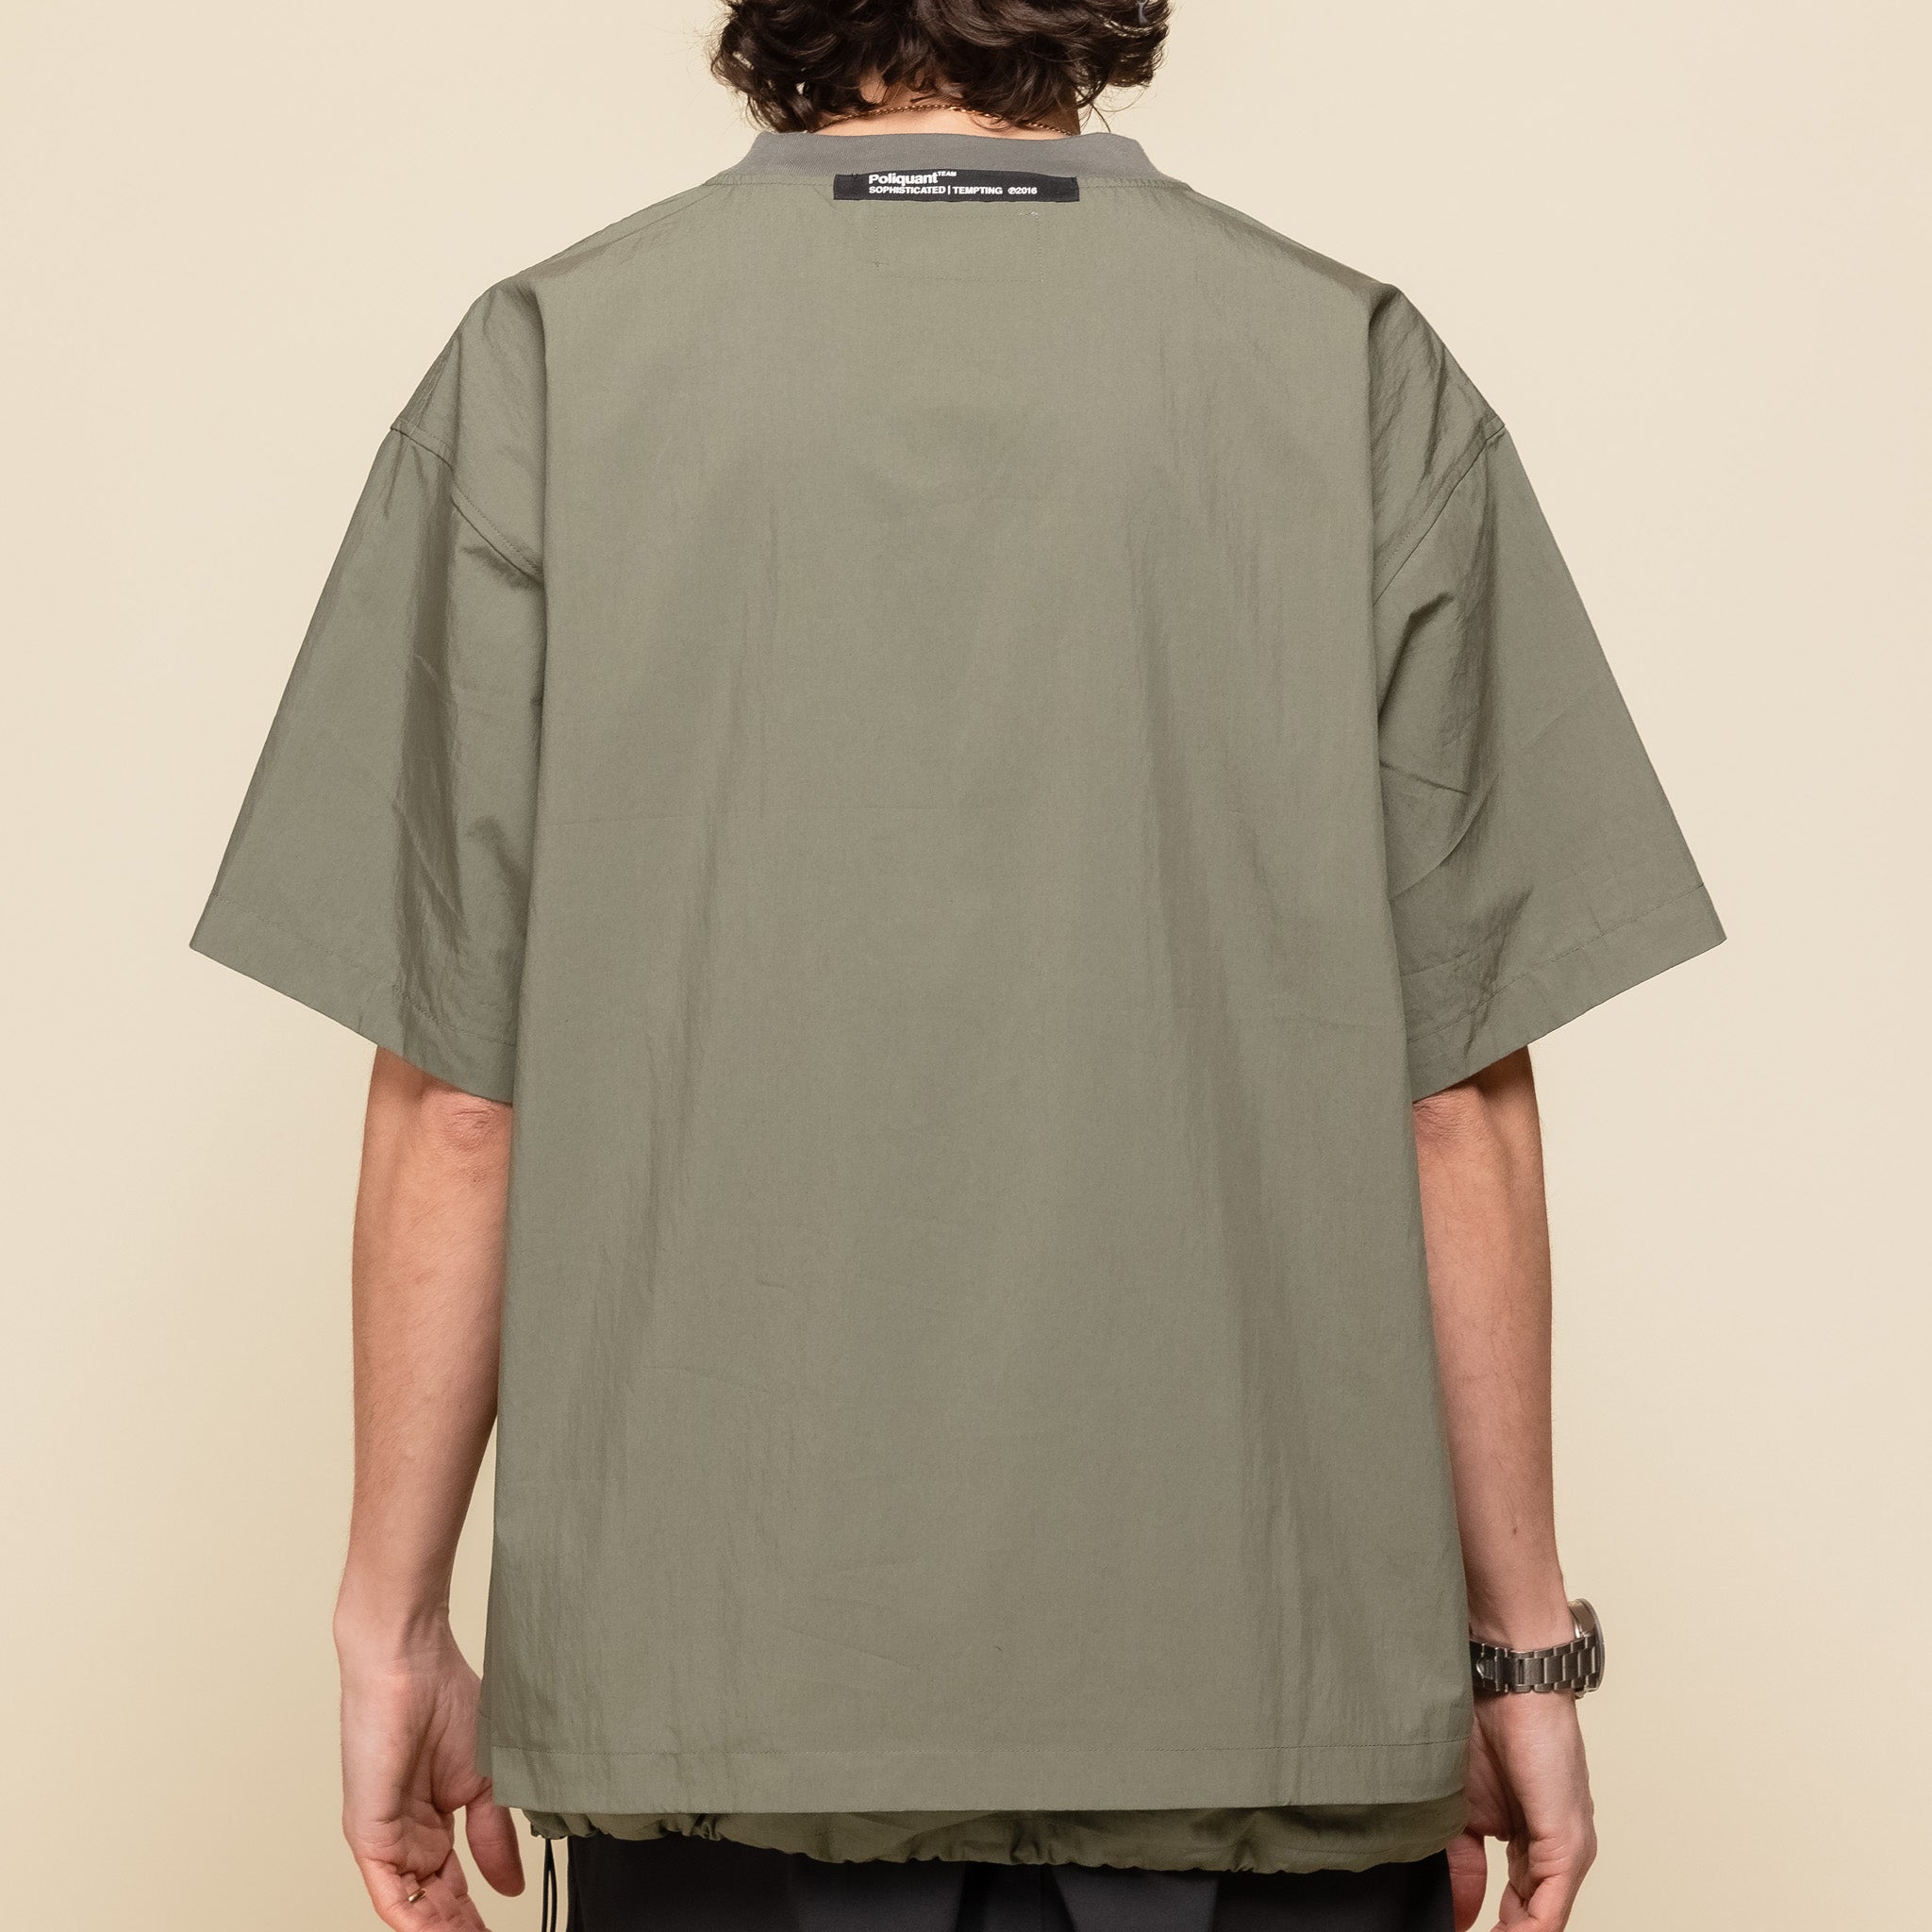 Poliquant - Deformed Windbreaker T-Shirt With Ventilation - Olive "poliquant stockist" "poliquant website" "poliquant t-shirt"